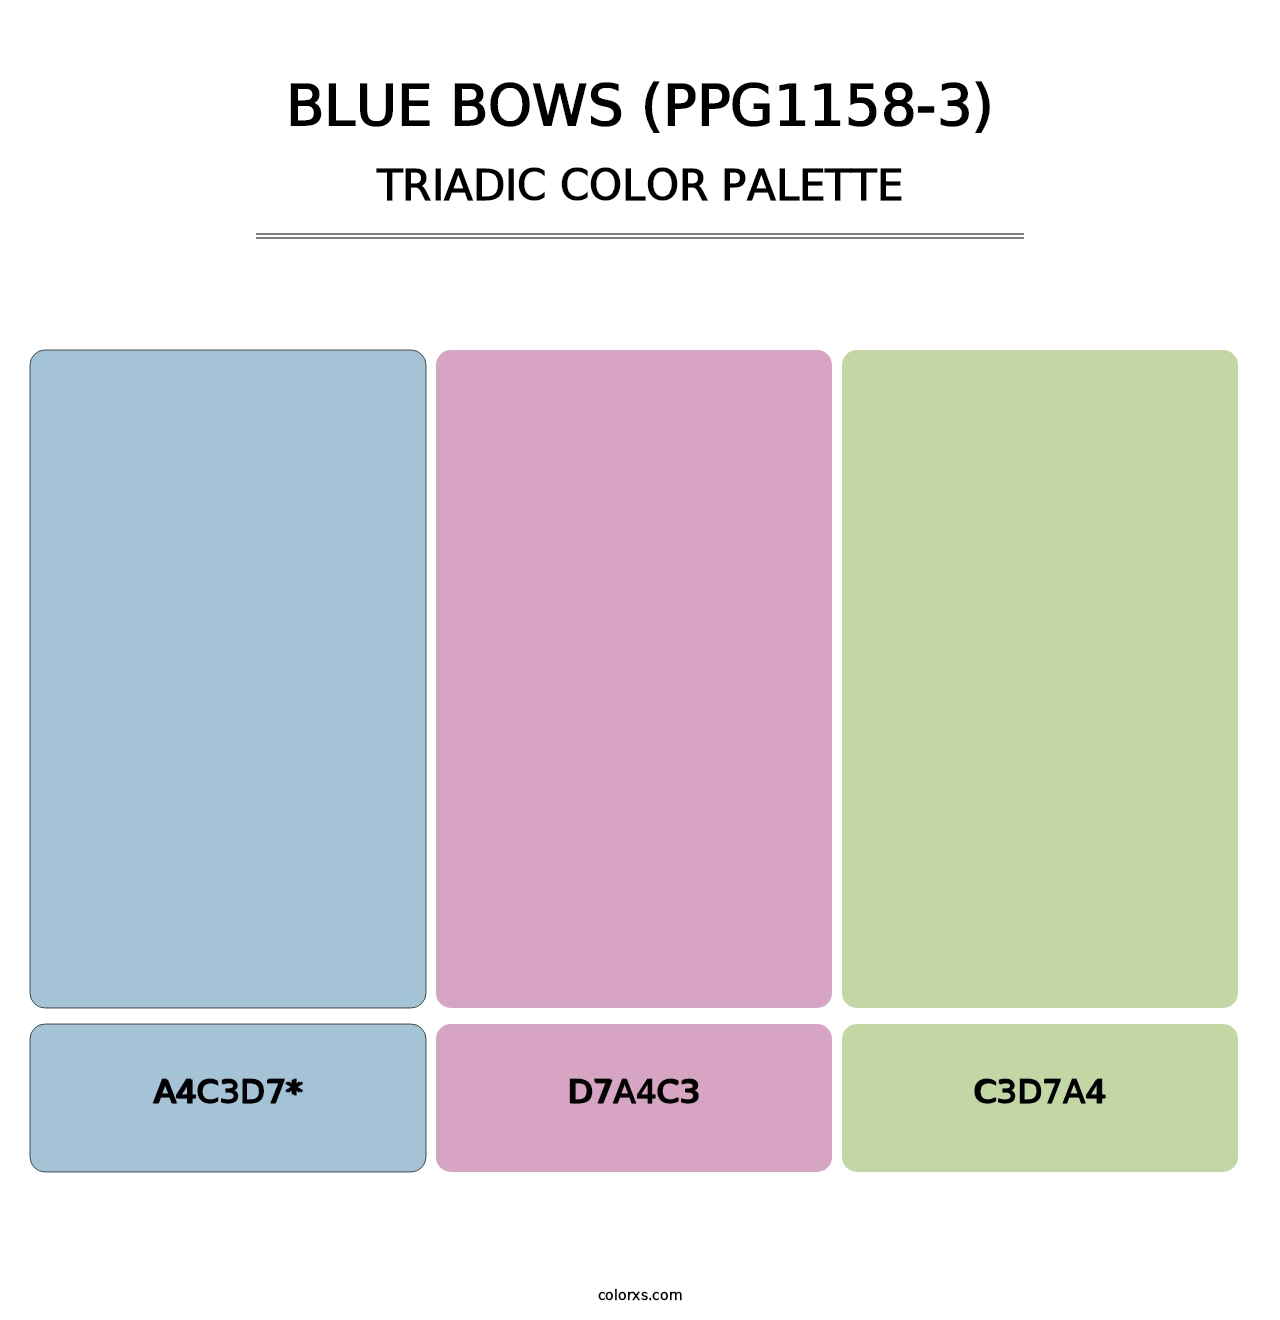 Blue Bows (PPG1158-3) - Triadic Color Palette